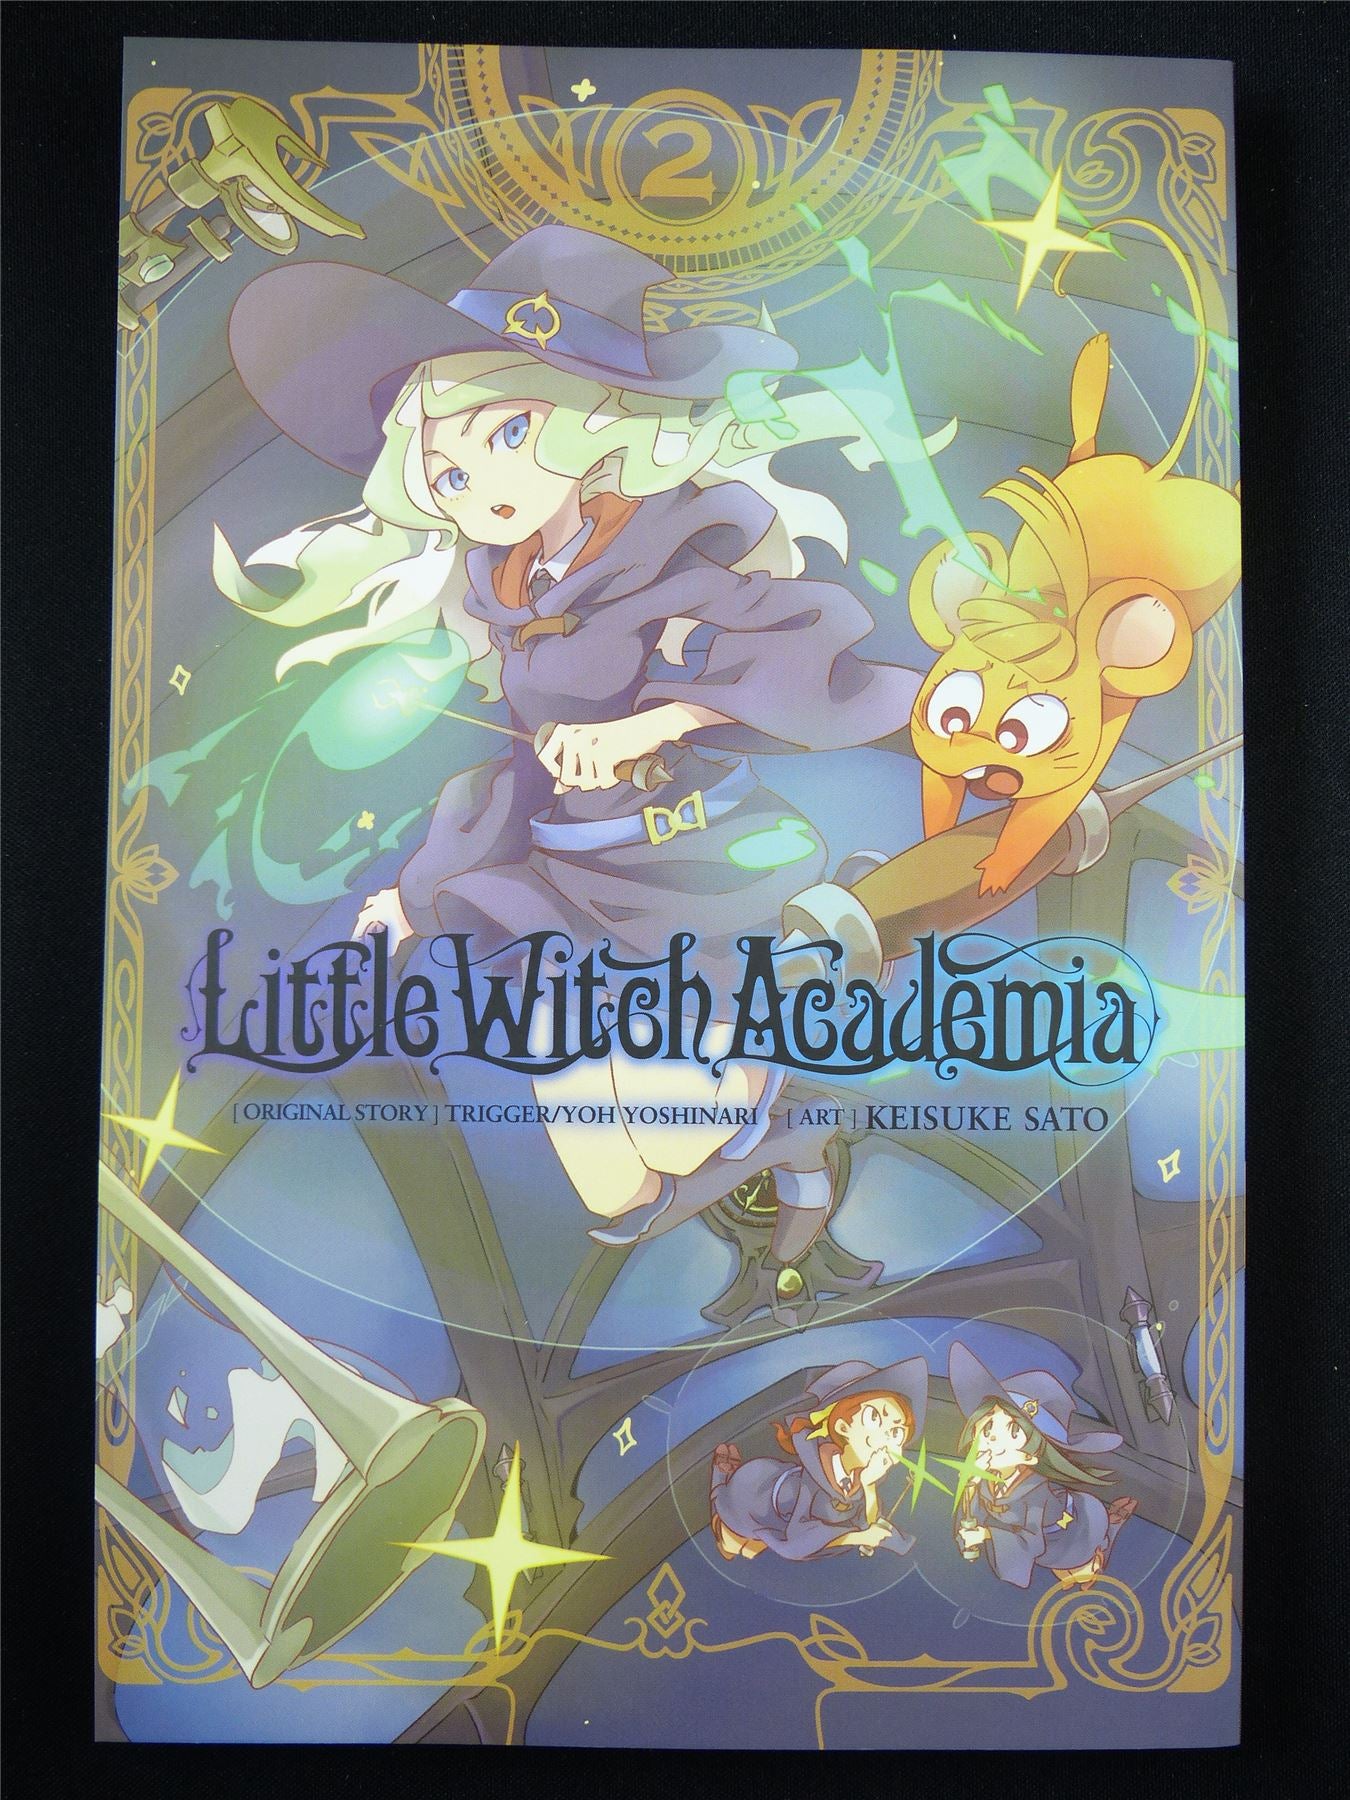 Little Witch Academia, Vol. 1 by Yoh Yoshinari